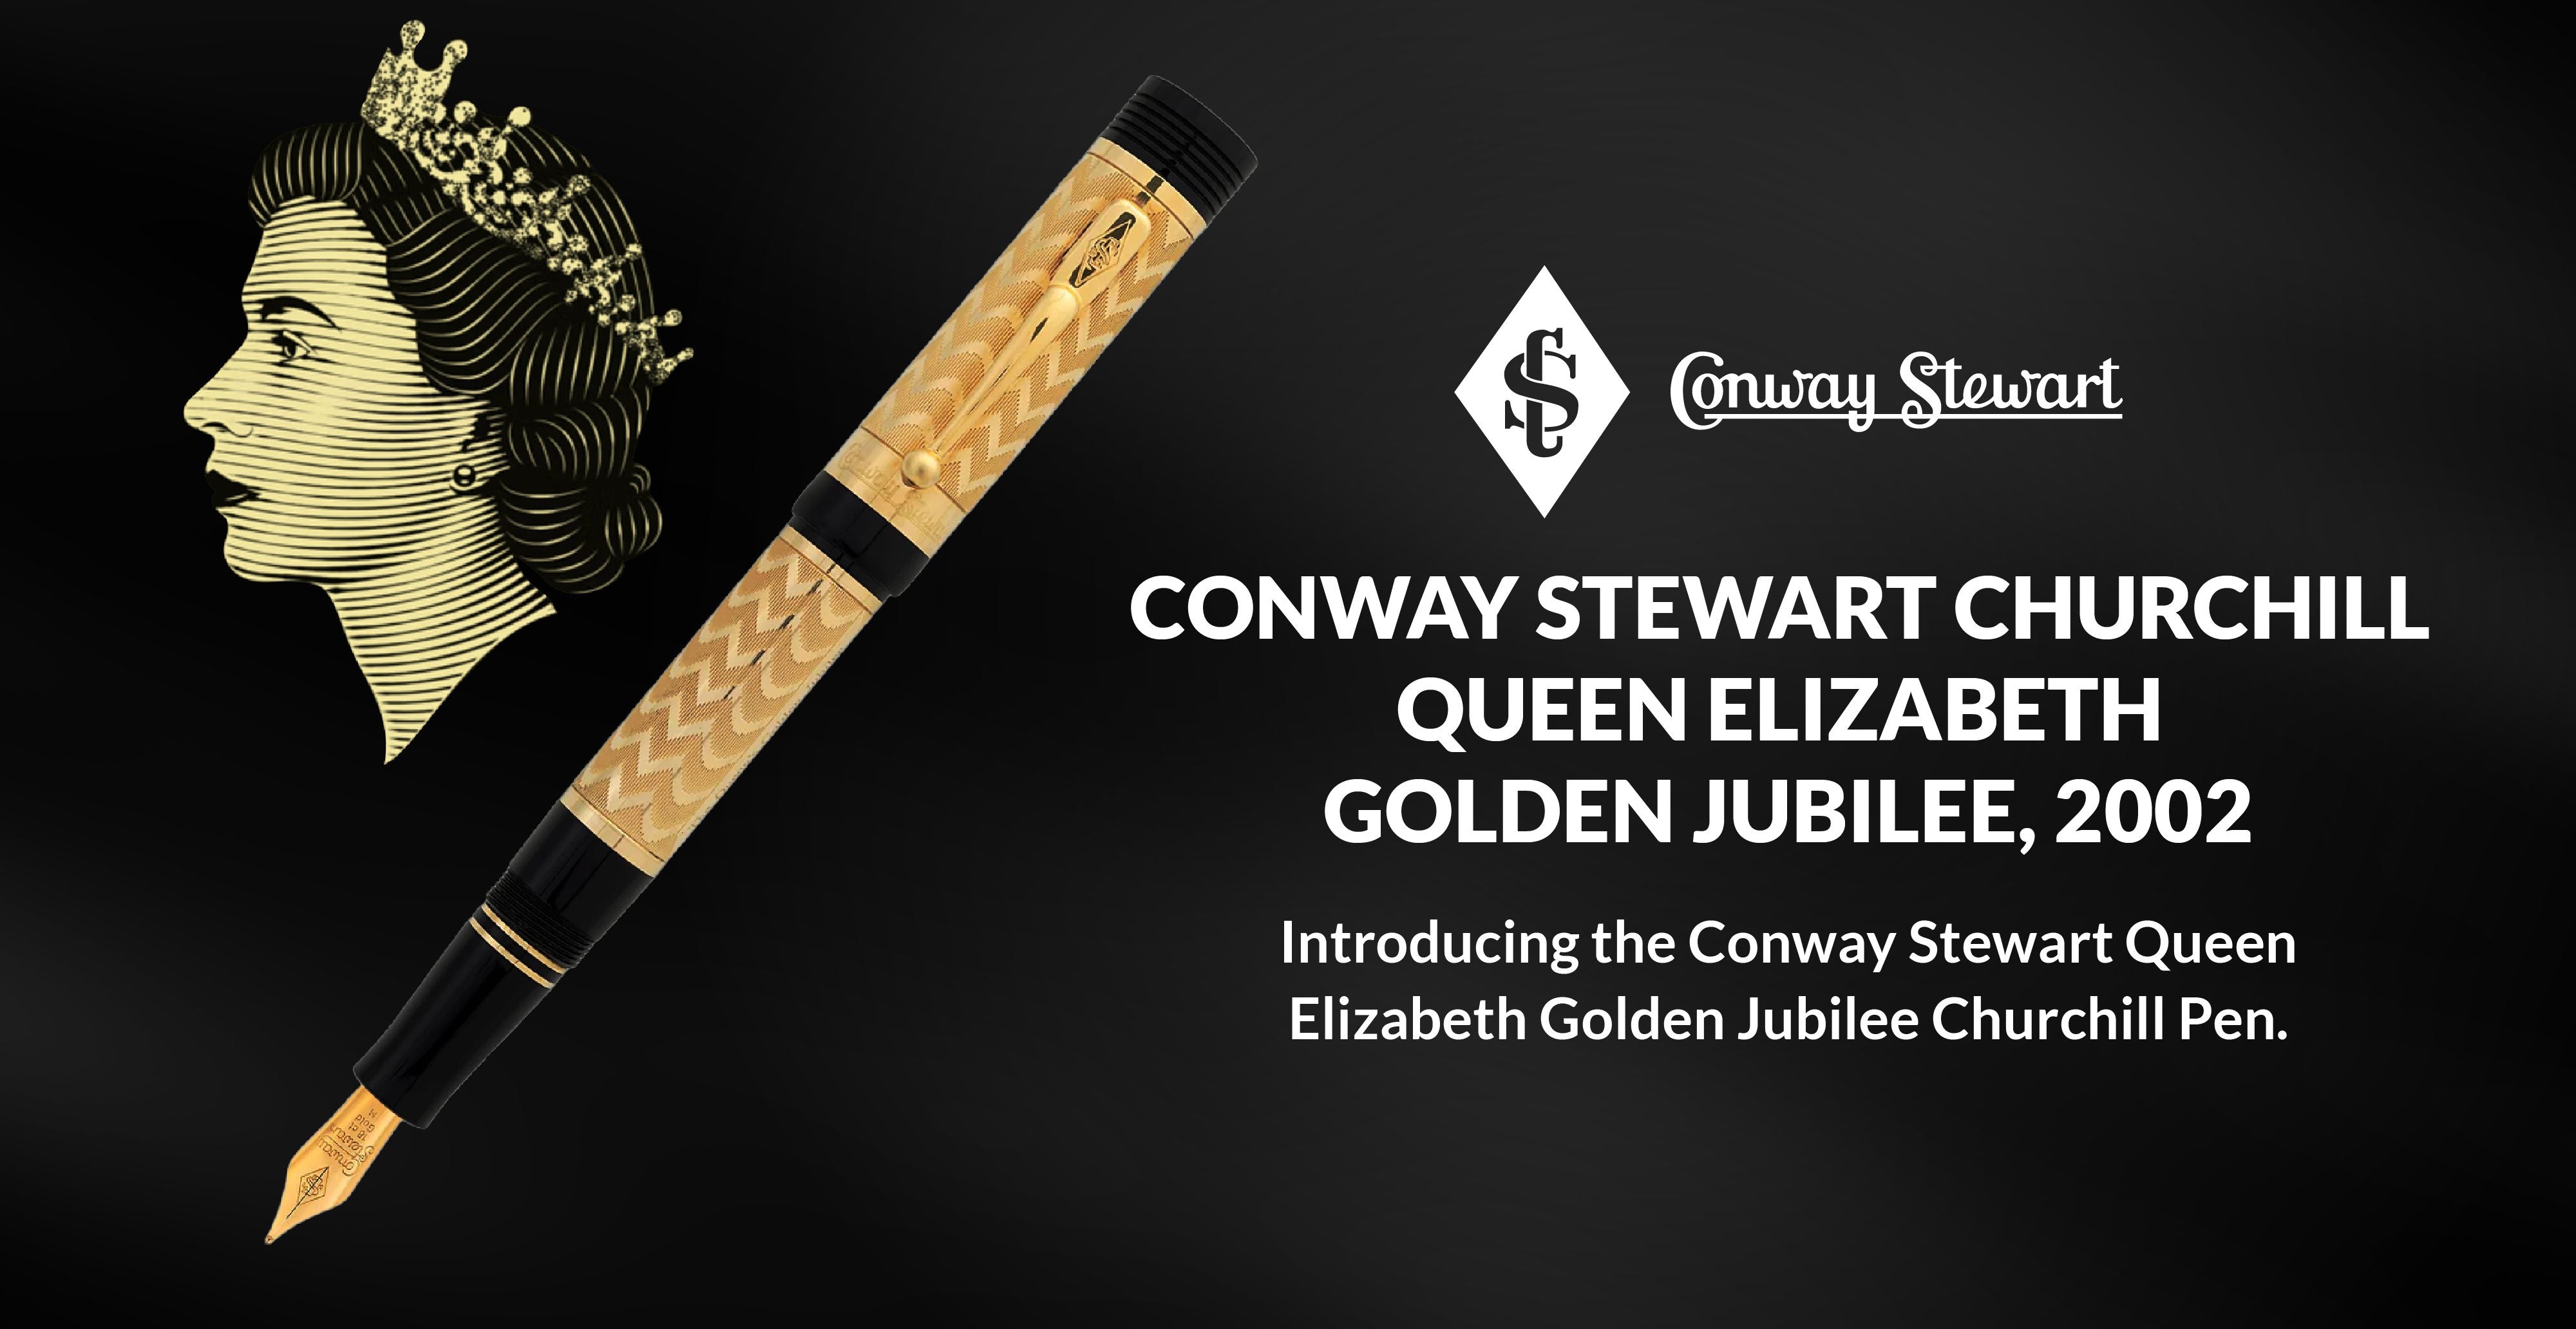 Conway Stewart Churchill Queen Elizabeth Golden Jubilee, 2002